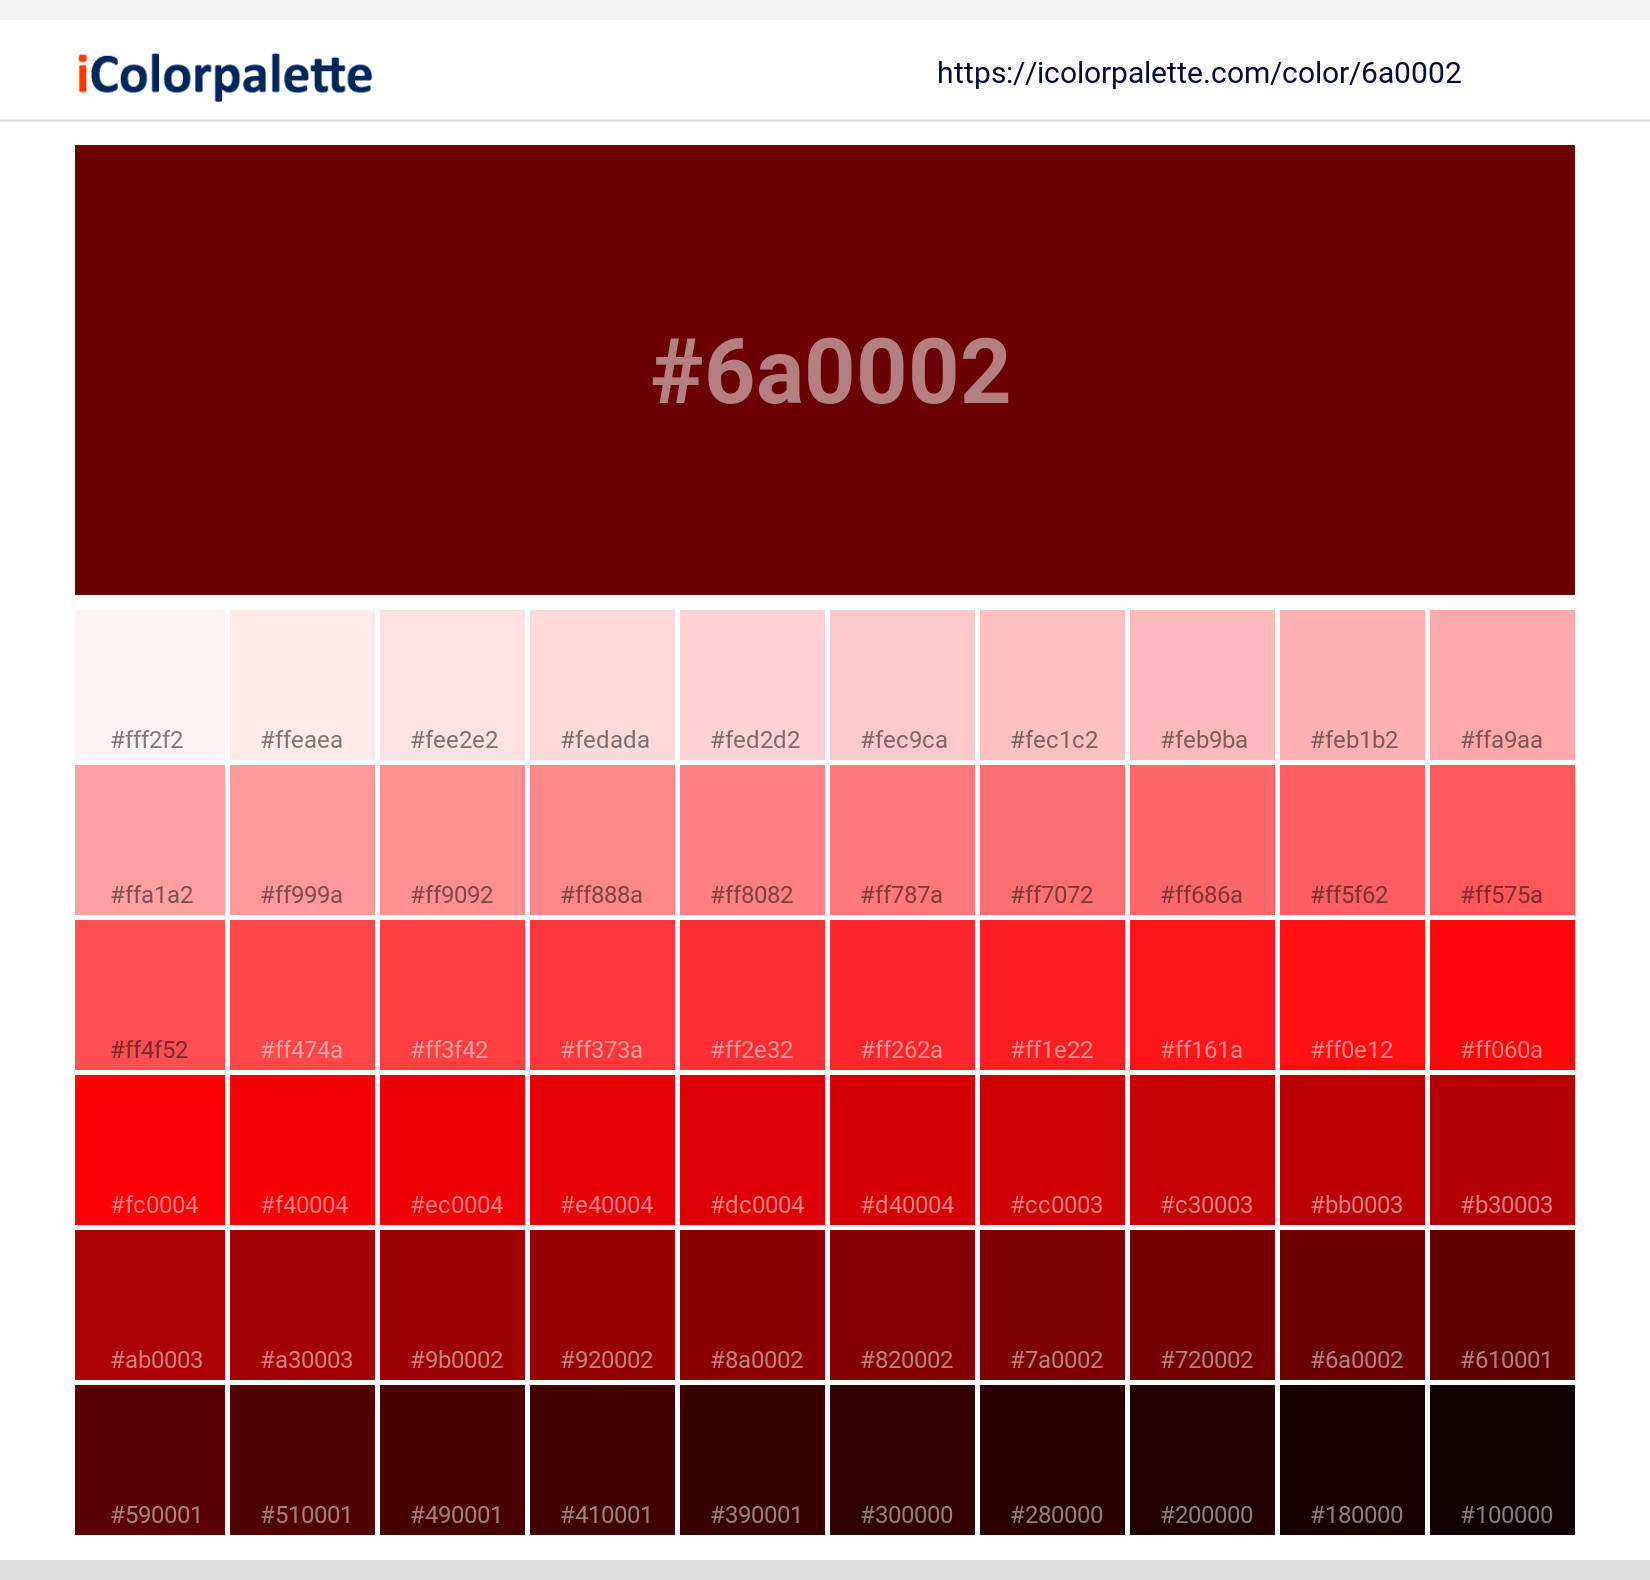 9C2A00 Hex Color, RGB: 156, 42, 0